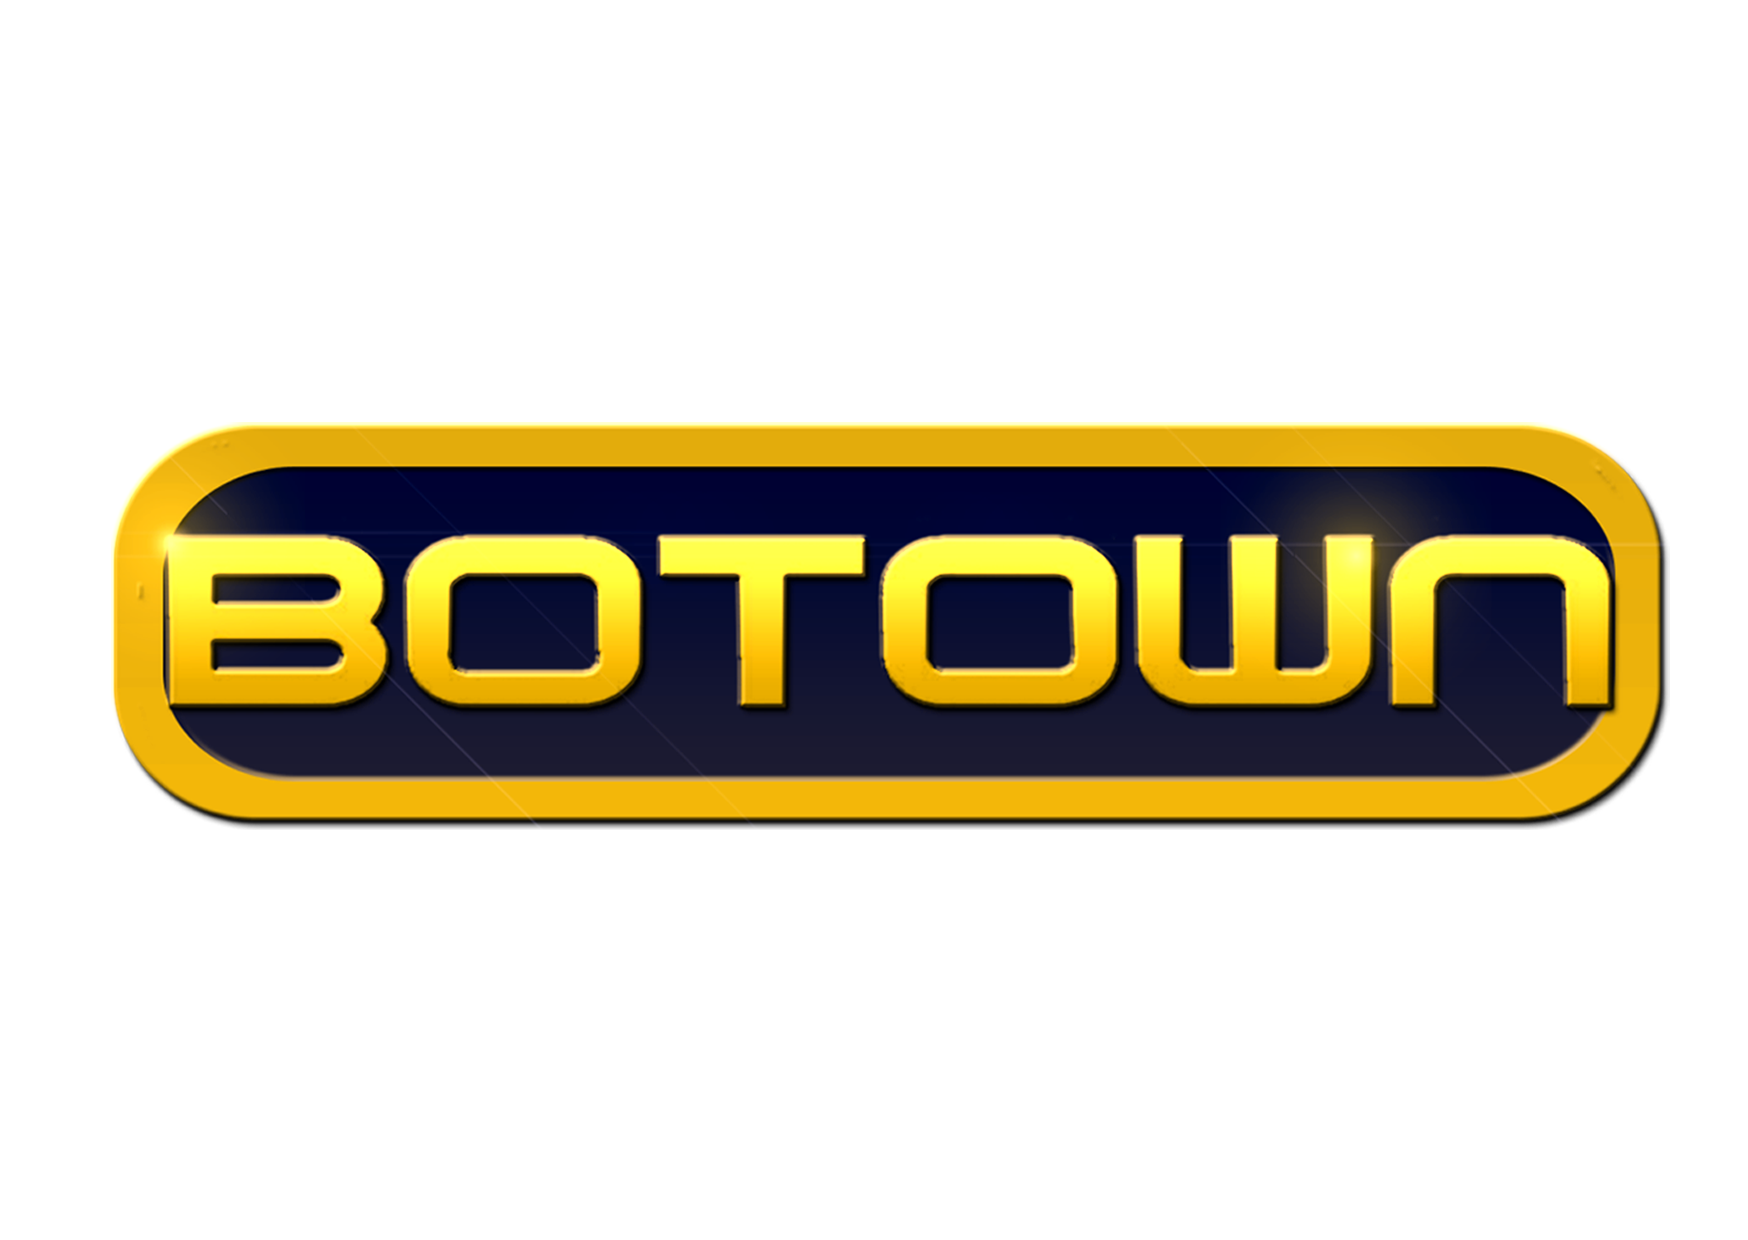 Botown